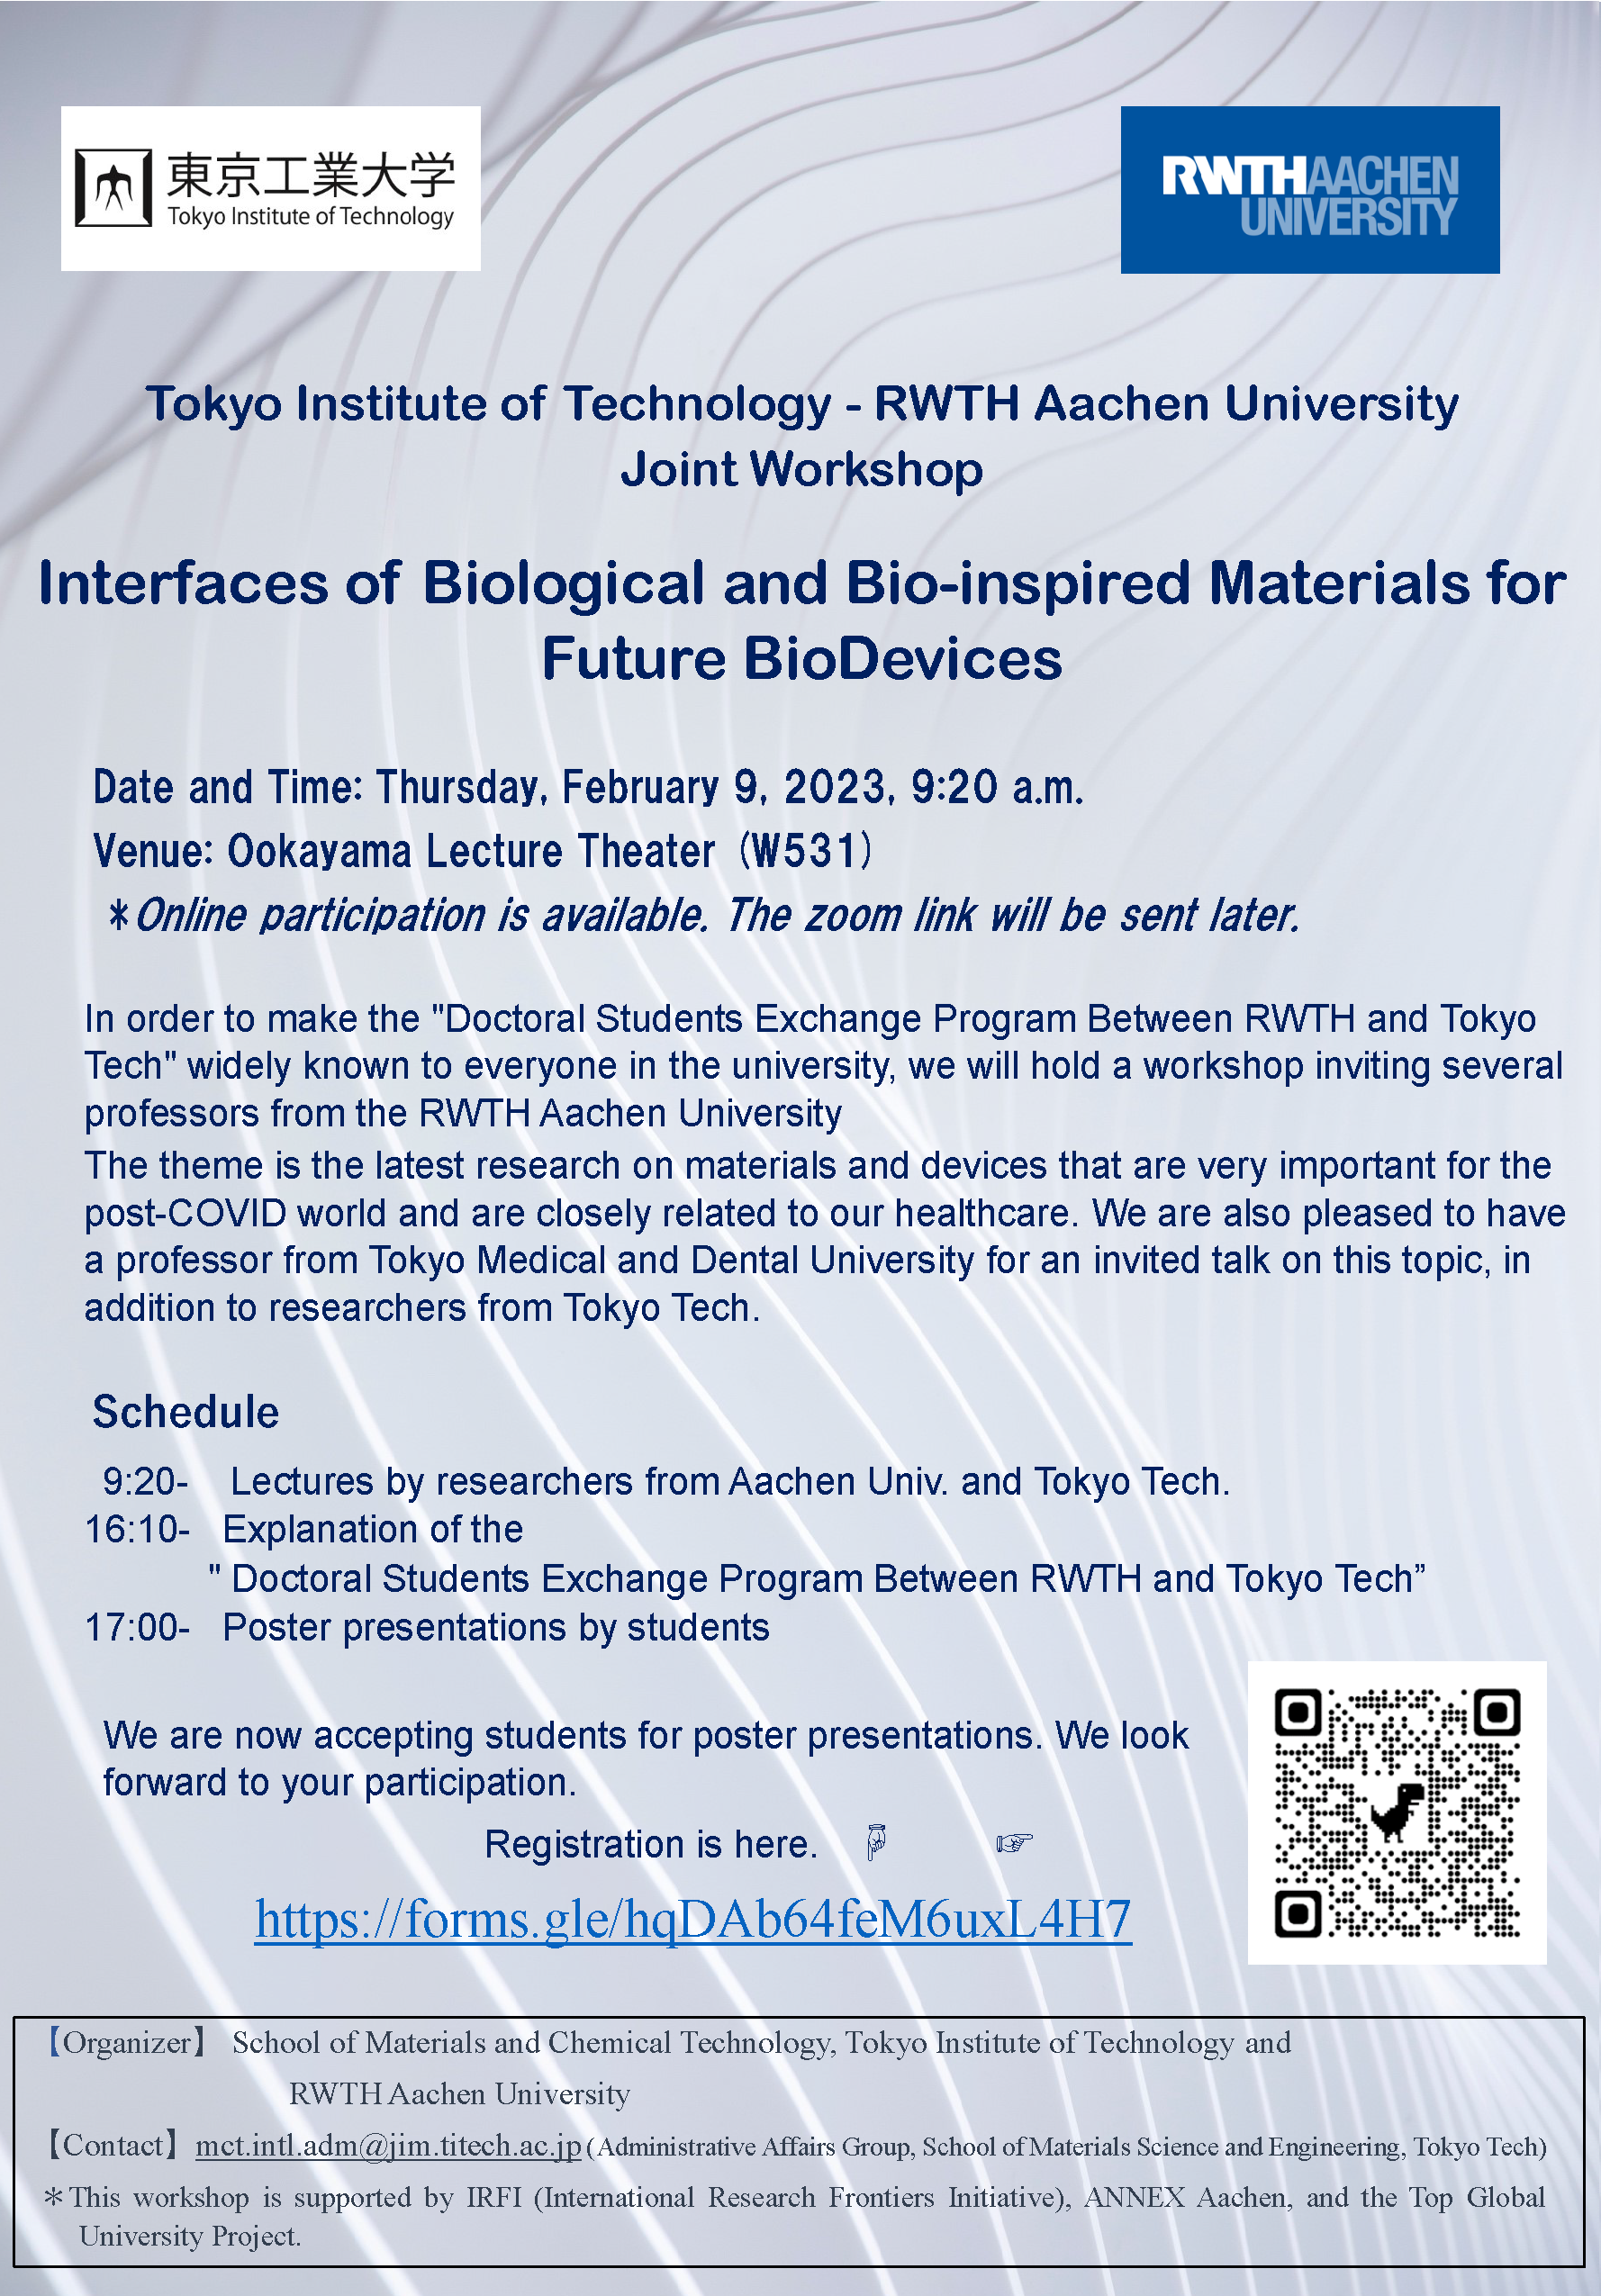 Tokyo Institute of Technology - RWTH Aachen University: Joint Workshop